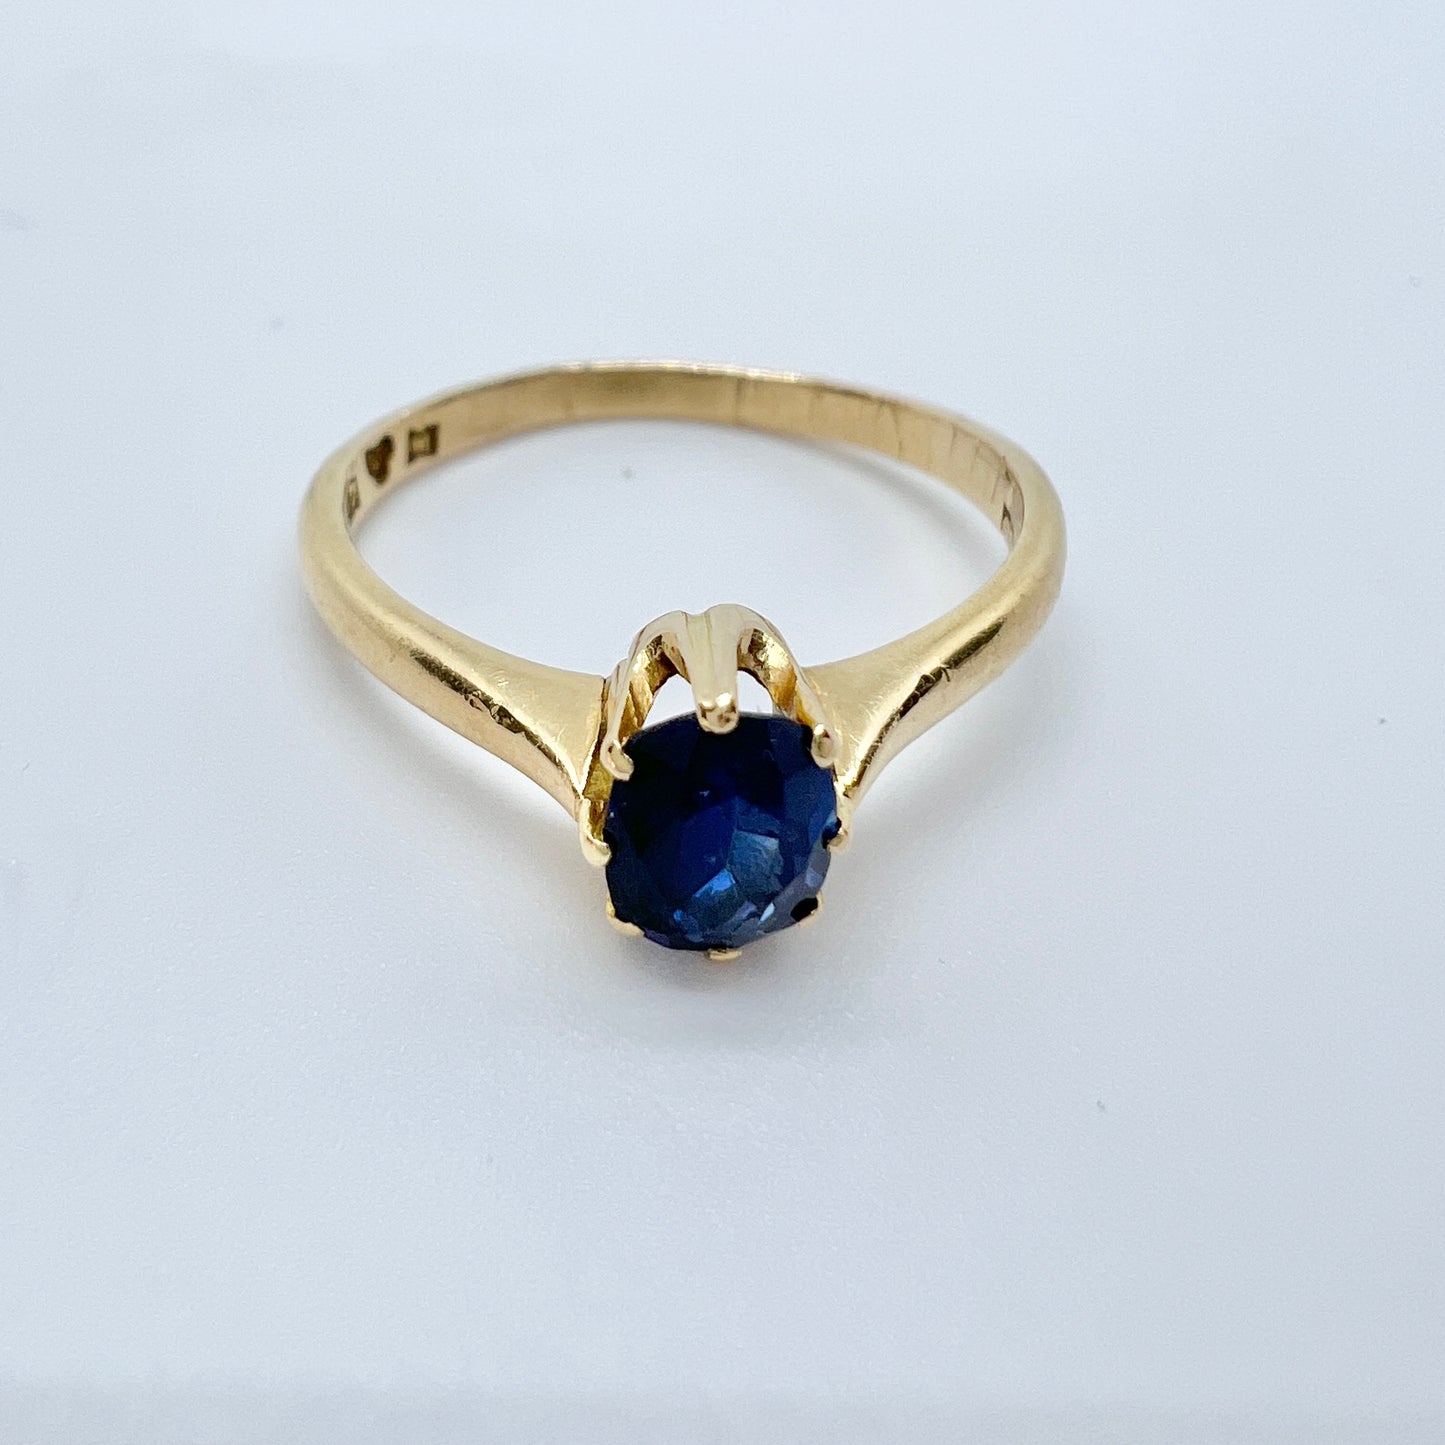 G Dahlgren, Sweden 1919. Antique 18k Gold Sapphire Ring.